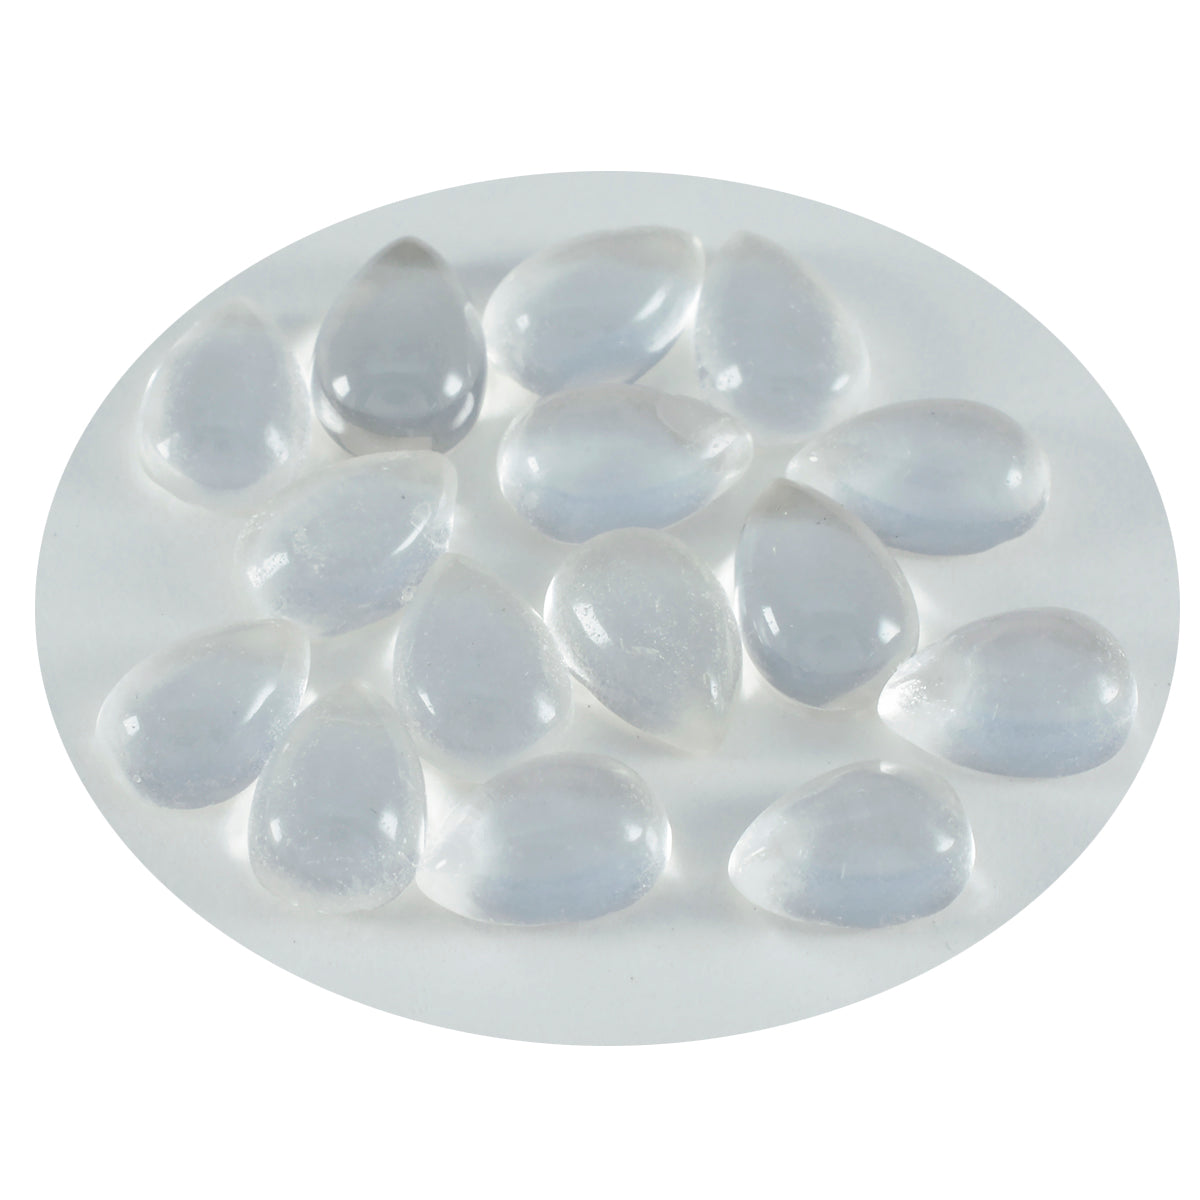 Riyogems 1PC White Crystal Quartz Cabochon 7x10 mm Pear Shape beauty Quality Gems